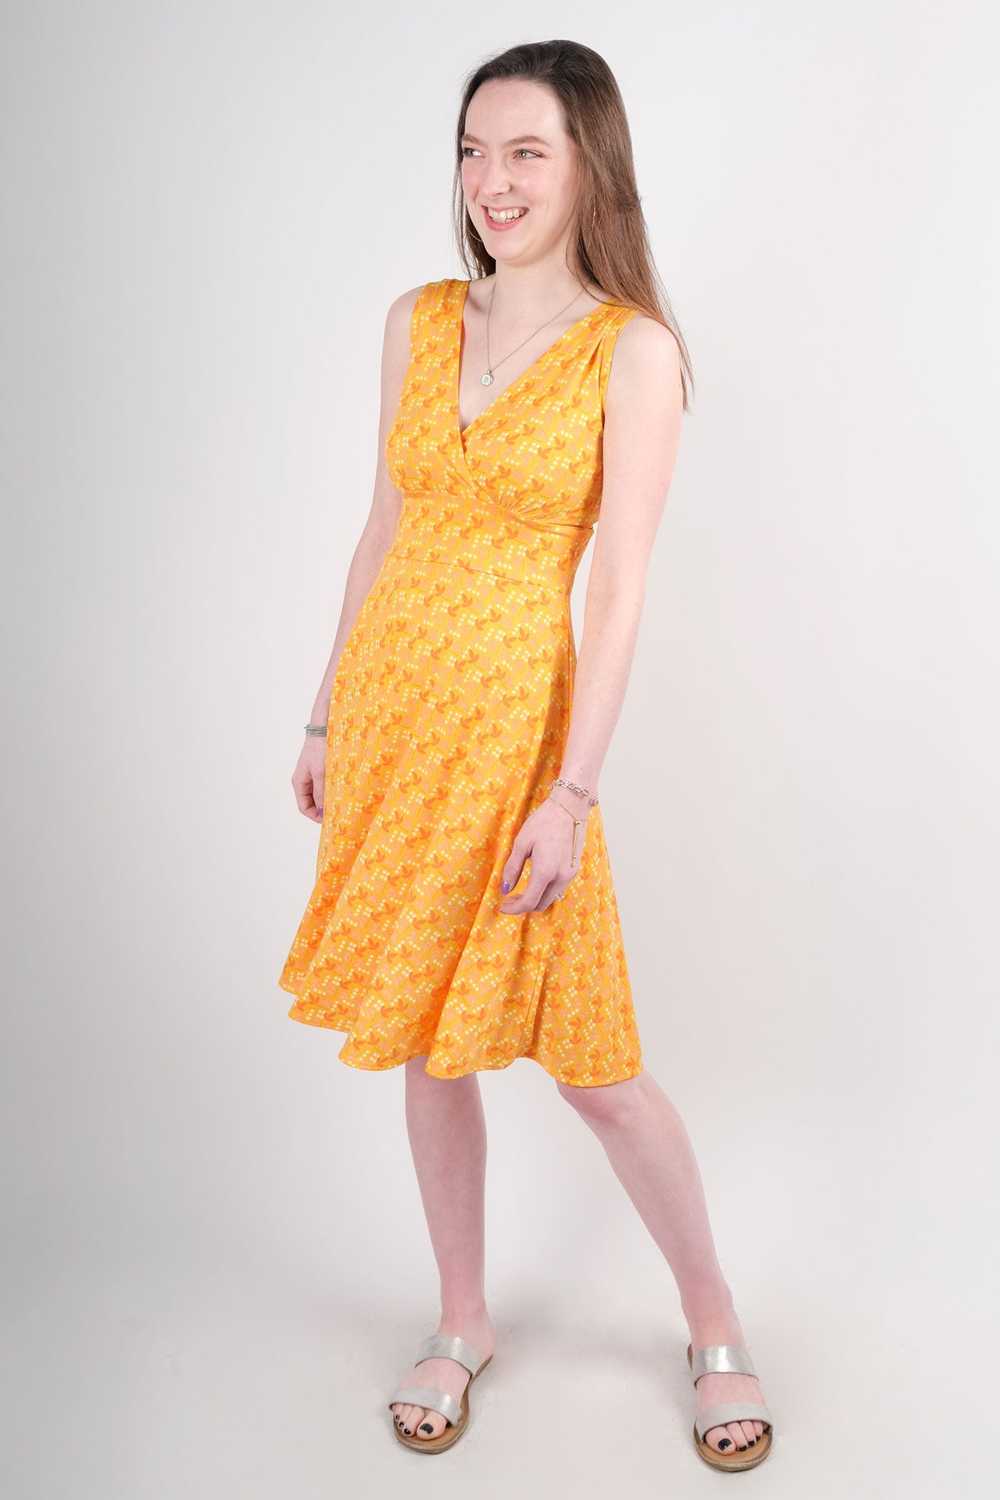 Karina Dresses Audrey Dress - Orange You Beautiful - image 7